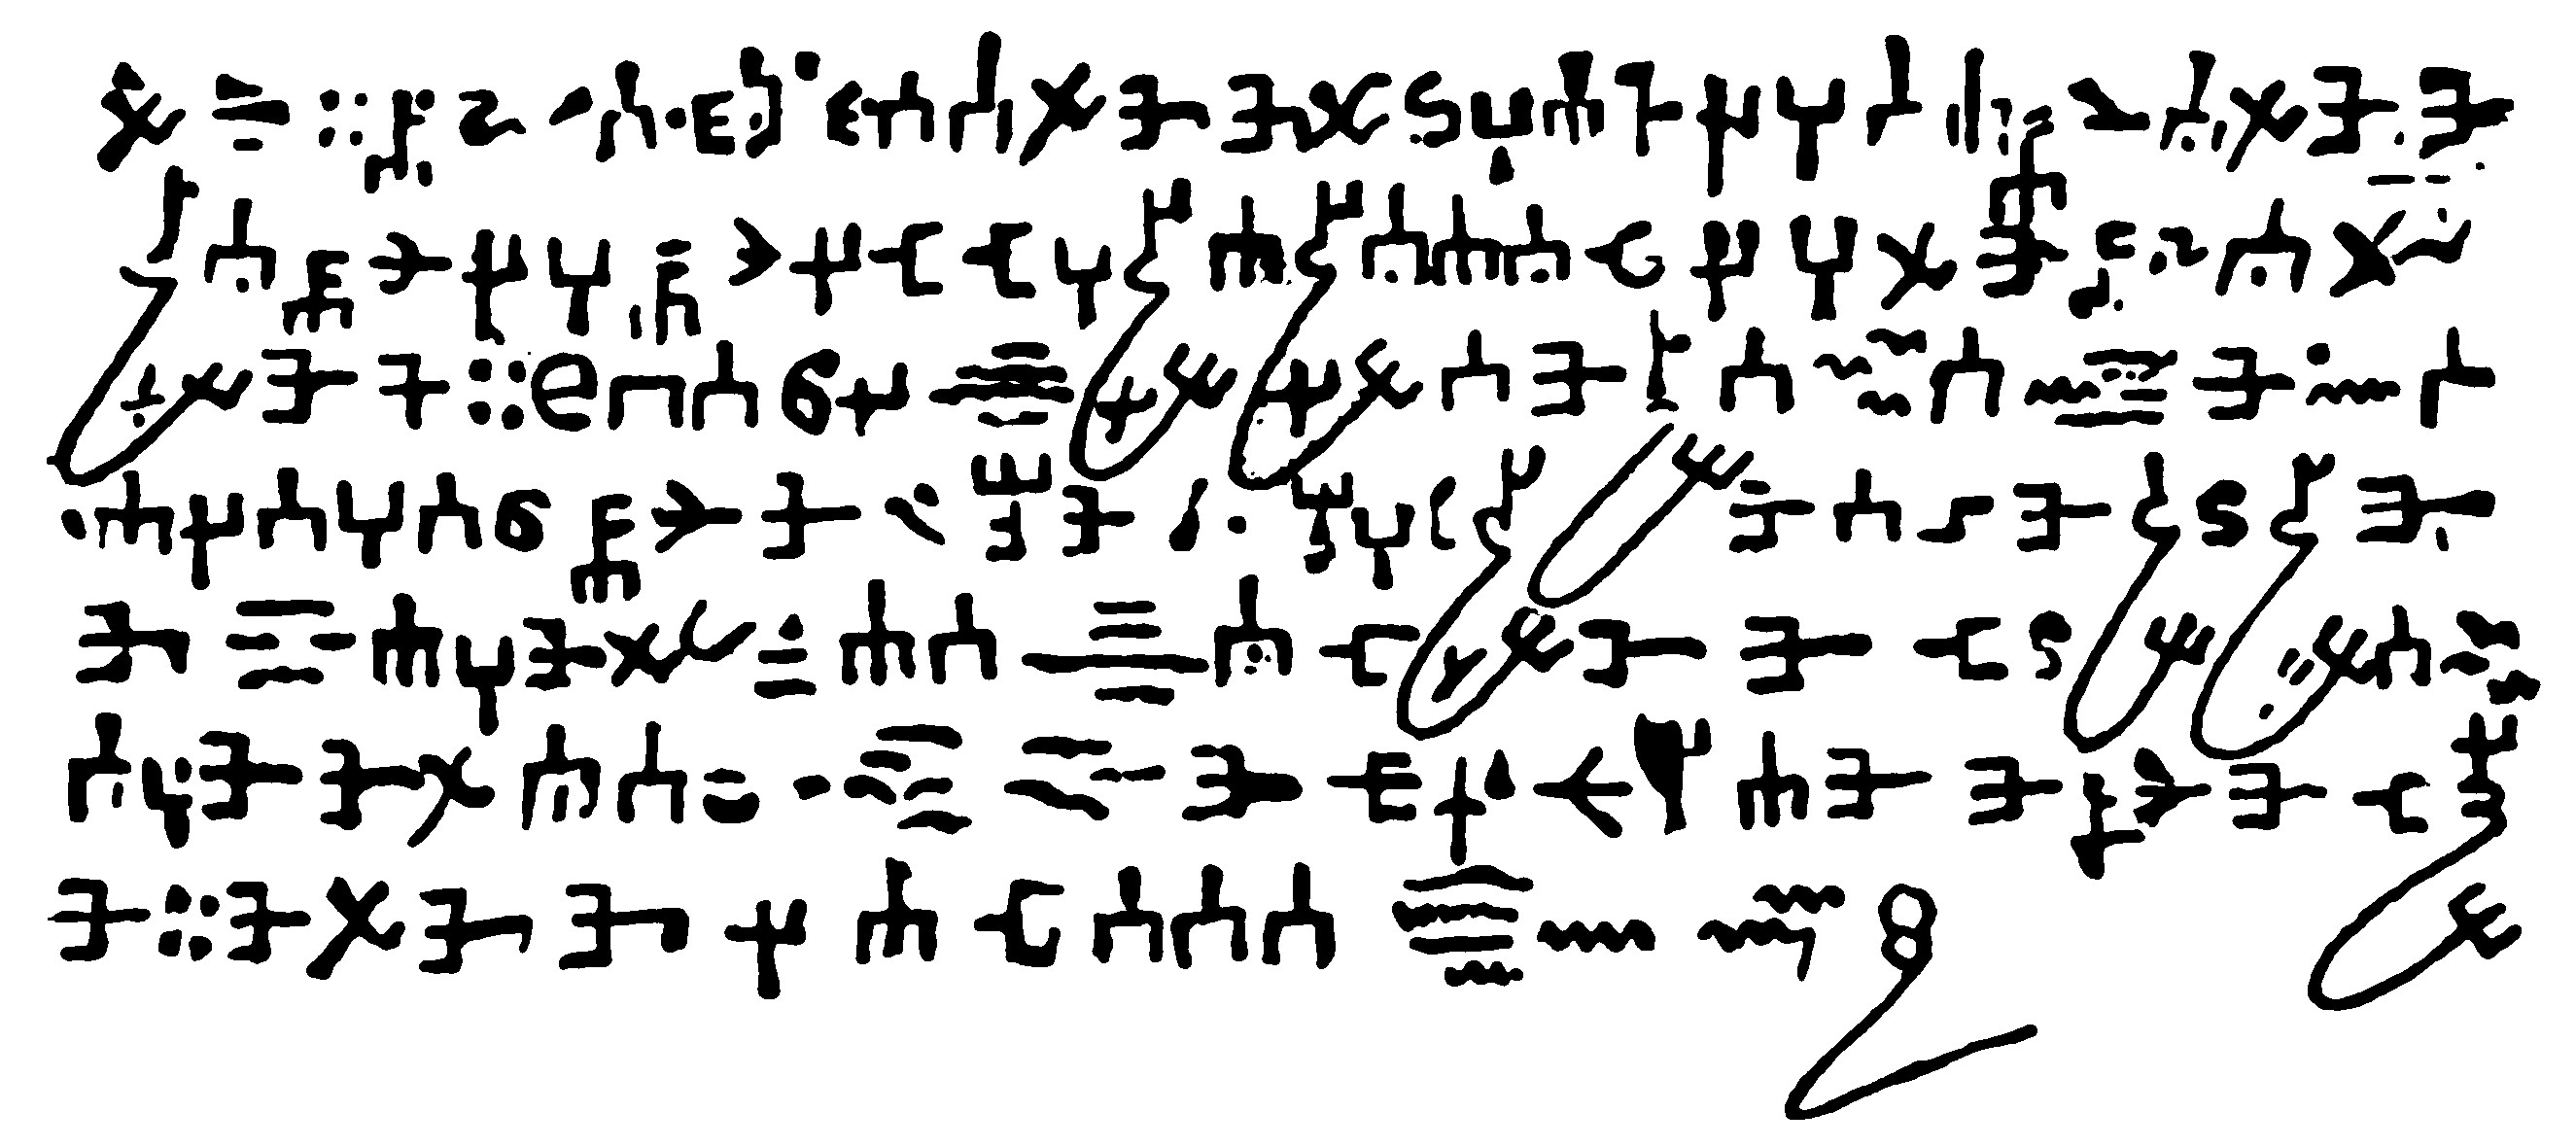 Spoletano Cipher - Occult Review (8.4, p. 194) - 1908-10.jpg